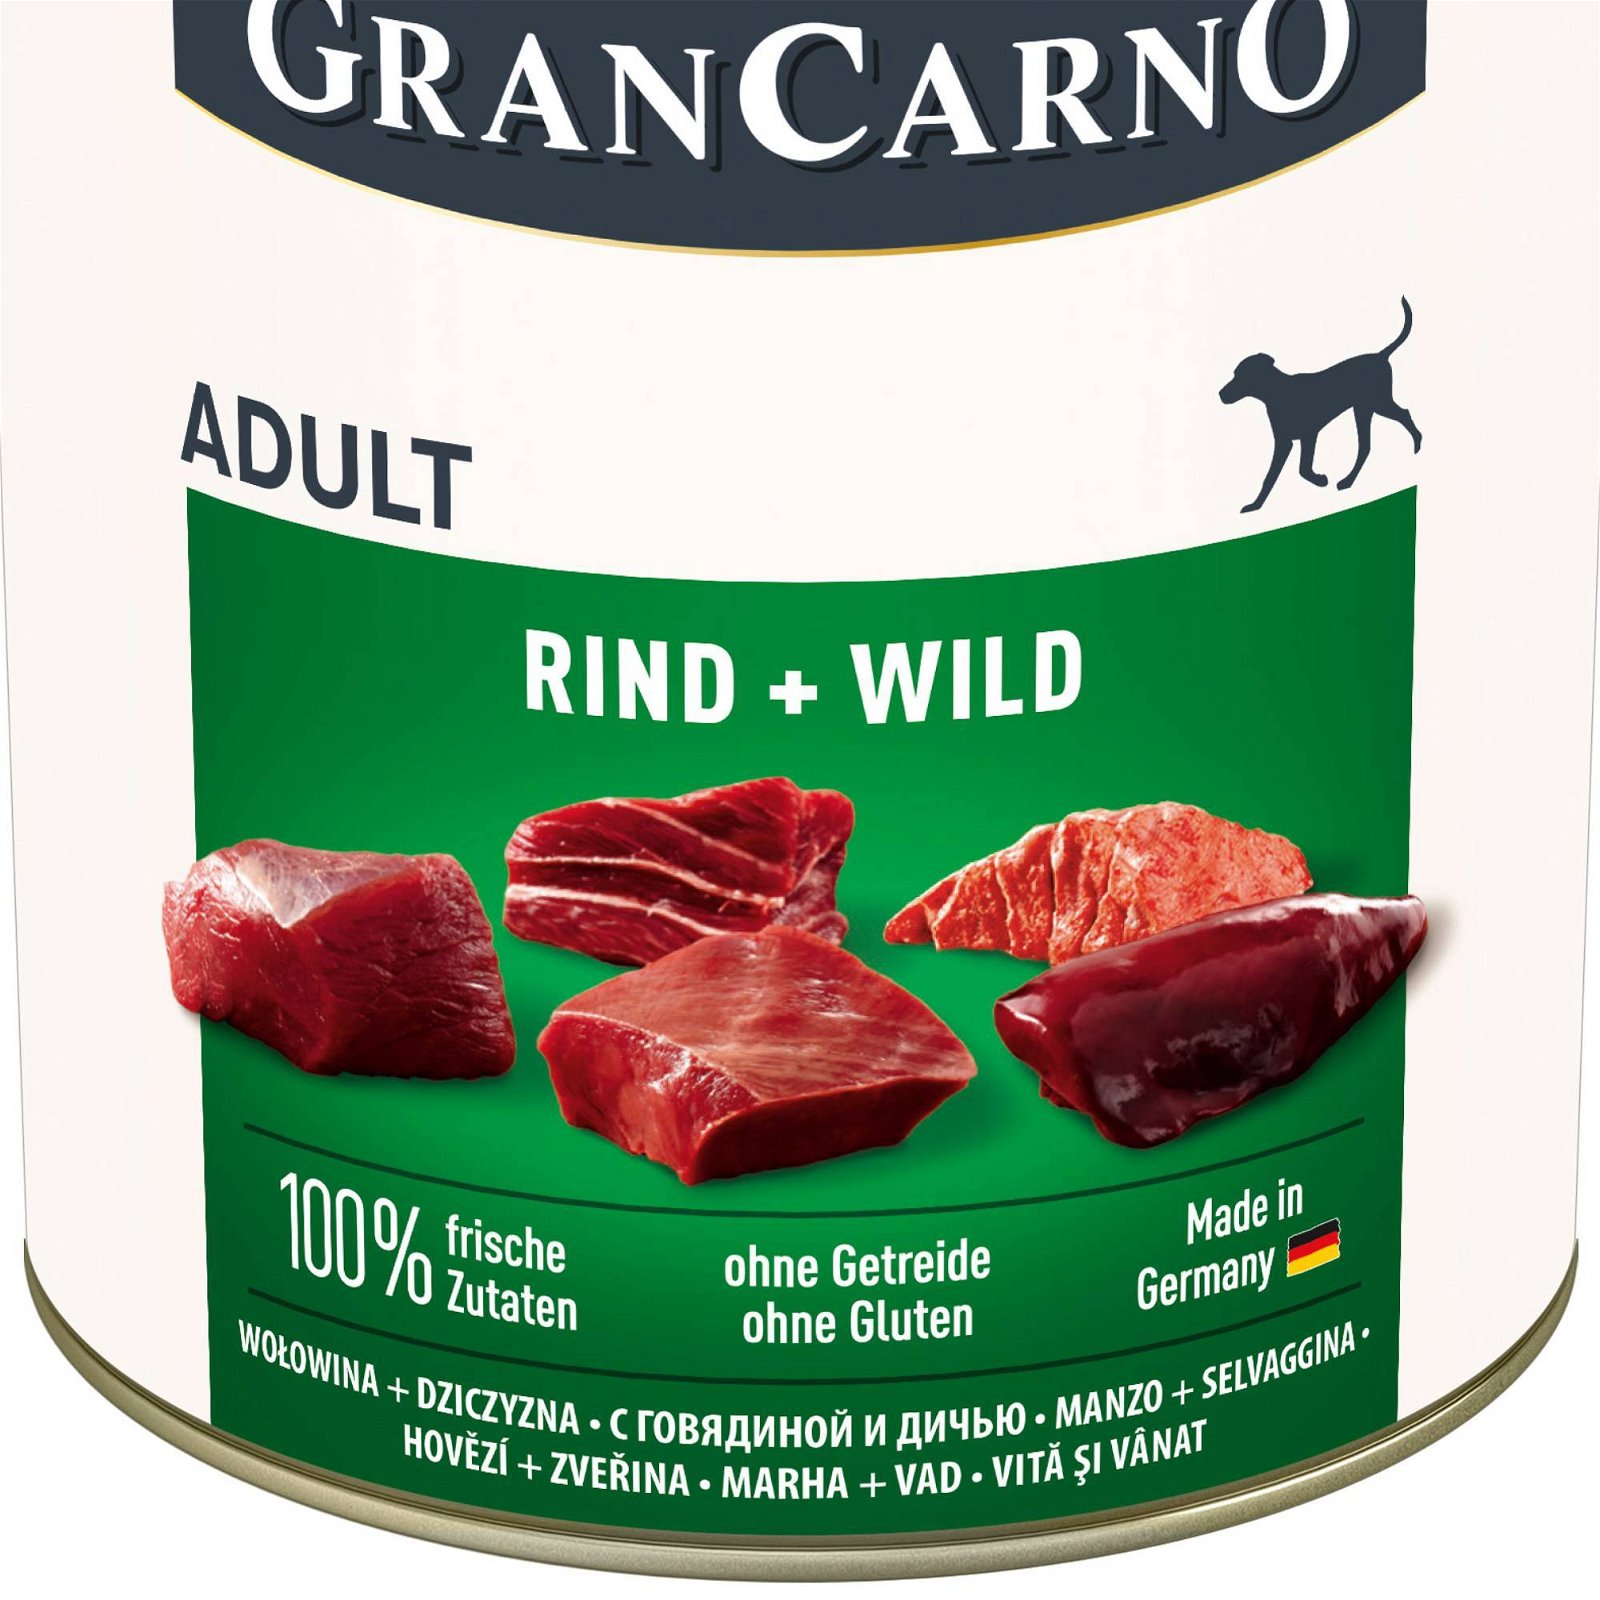 Hundefutter 'Animonda Cran Carno ® Adult', Rind & Wild